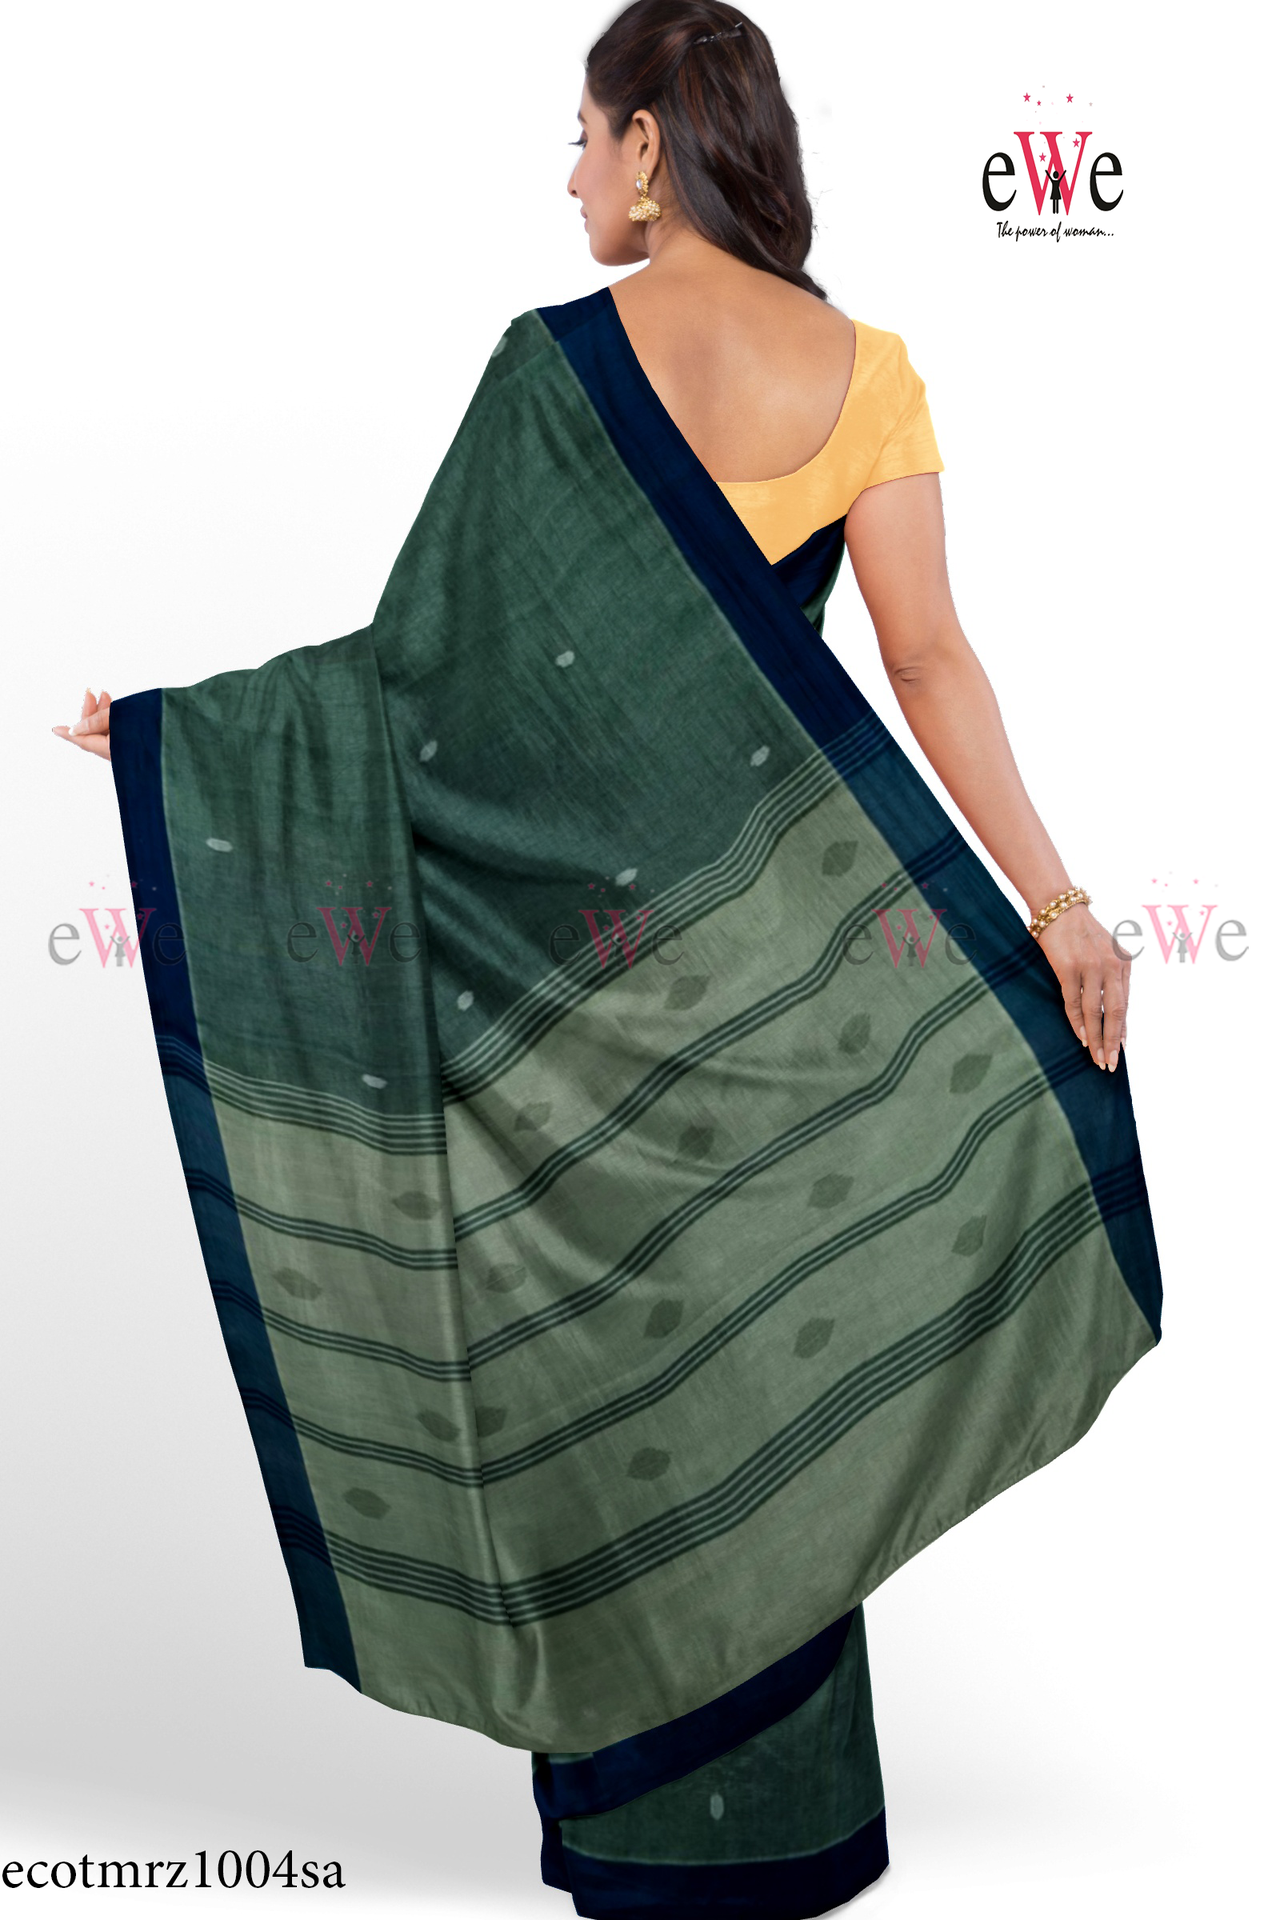 Teal green &amp; Ash Handspun Handwoven Handloom saree